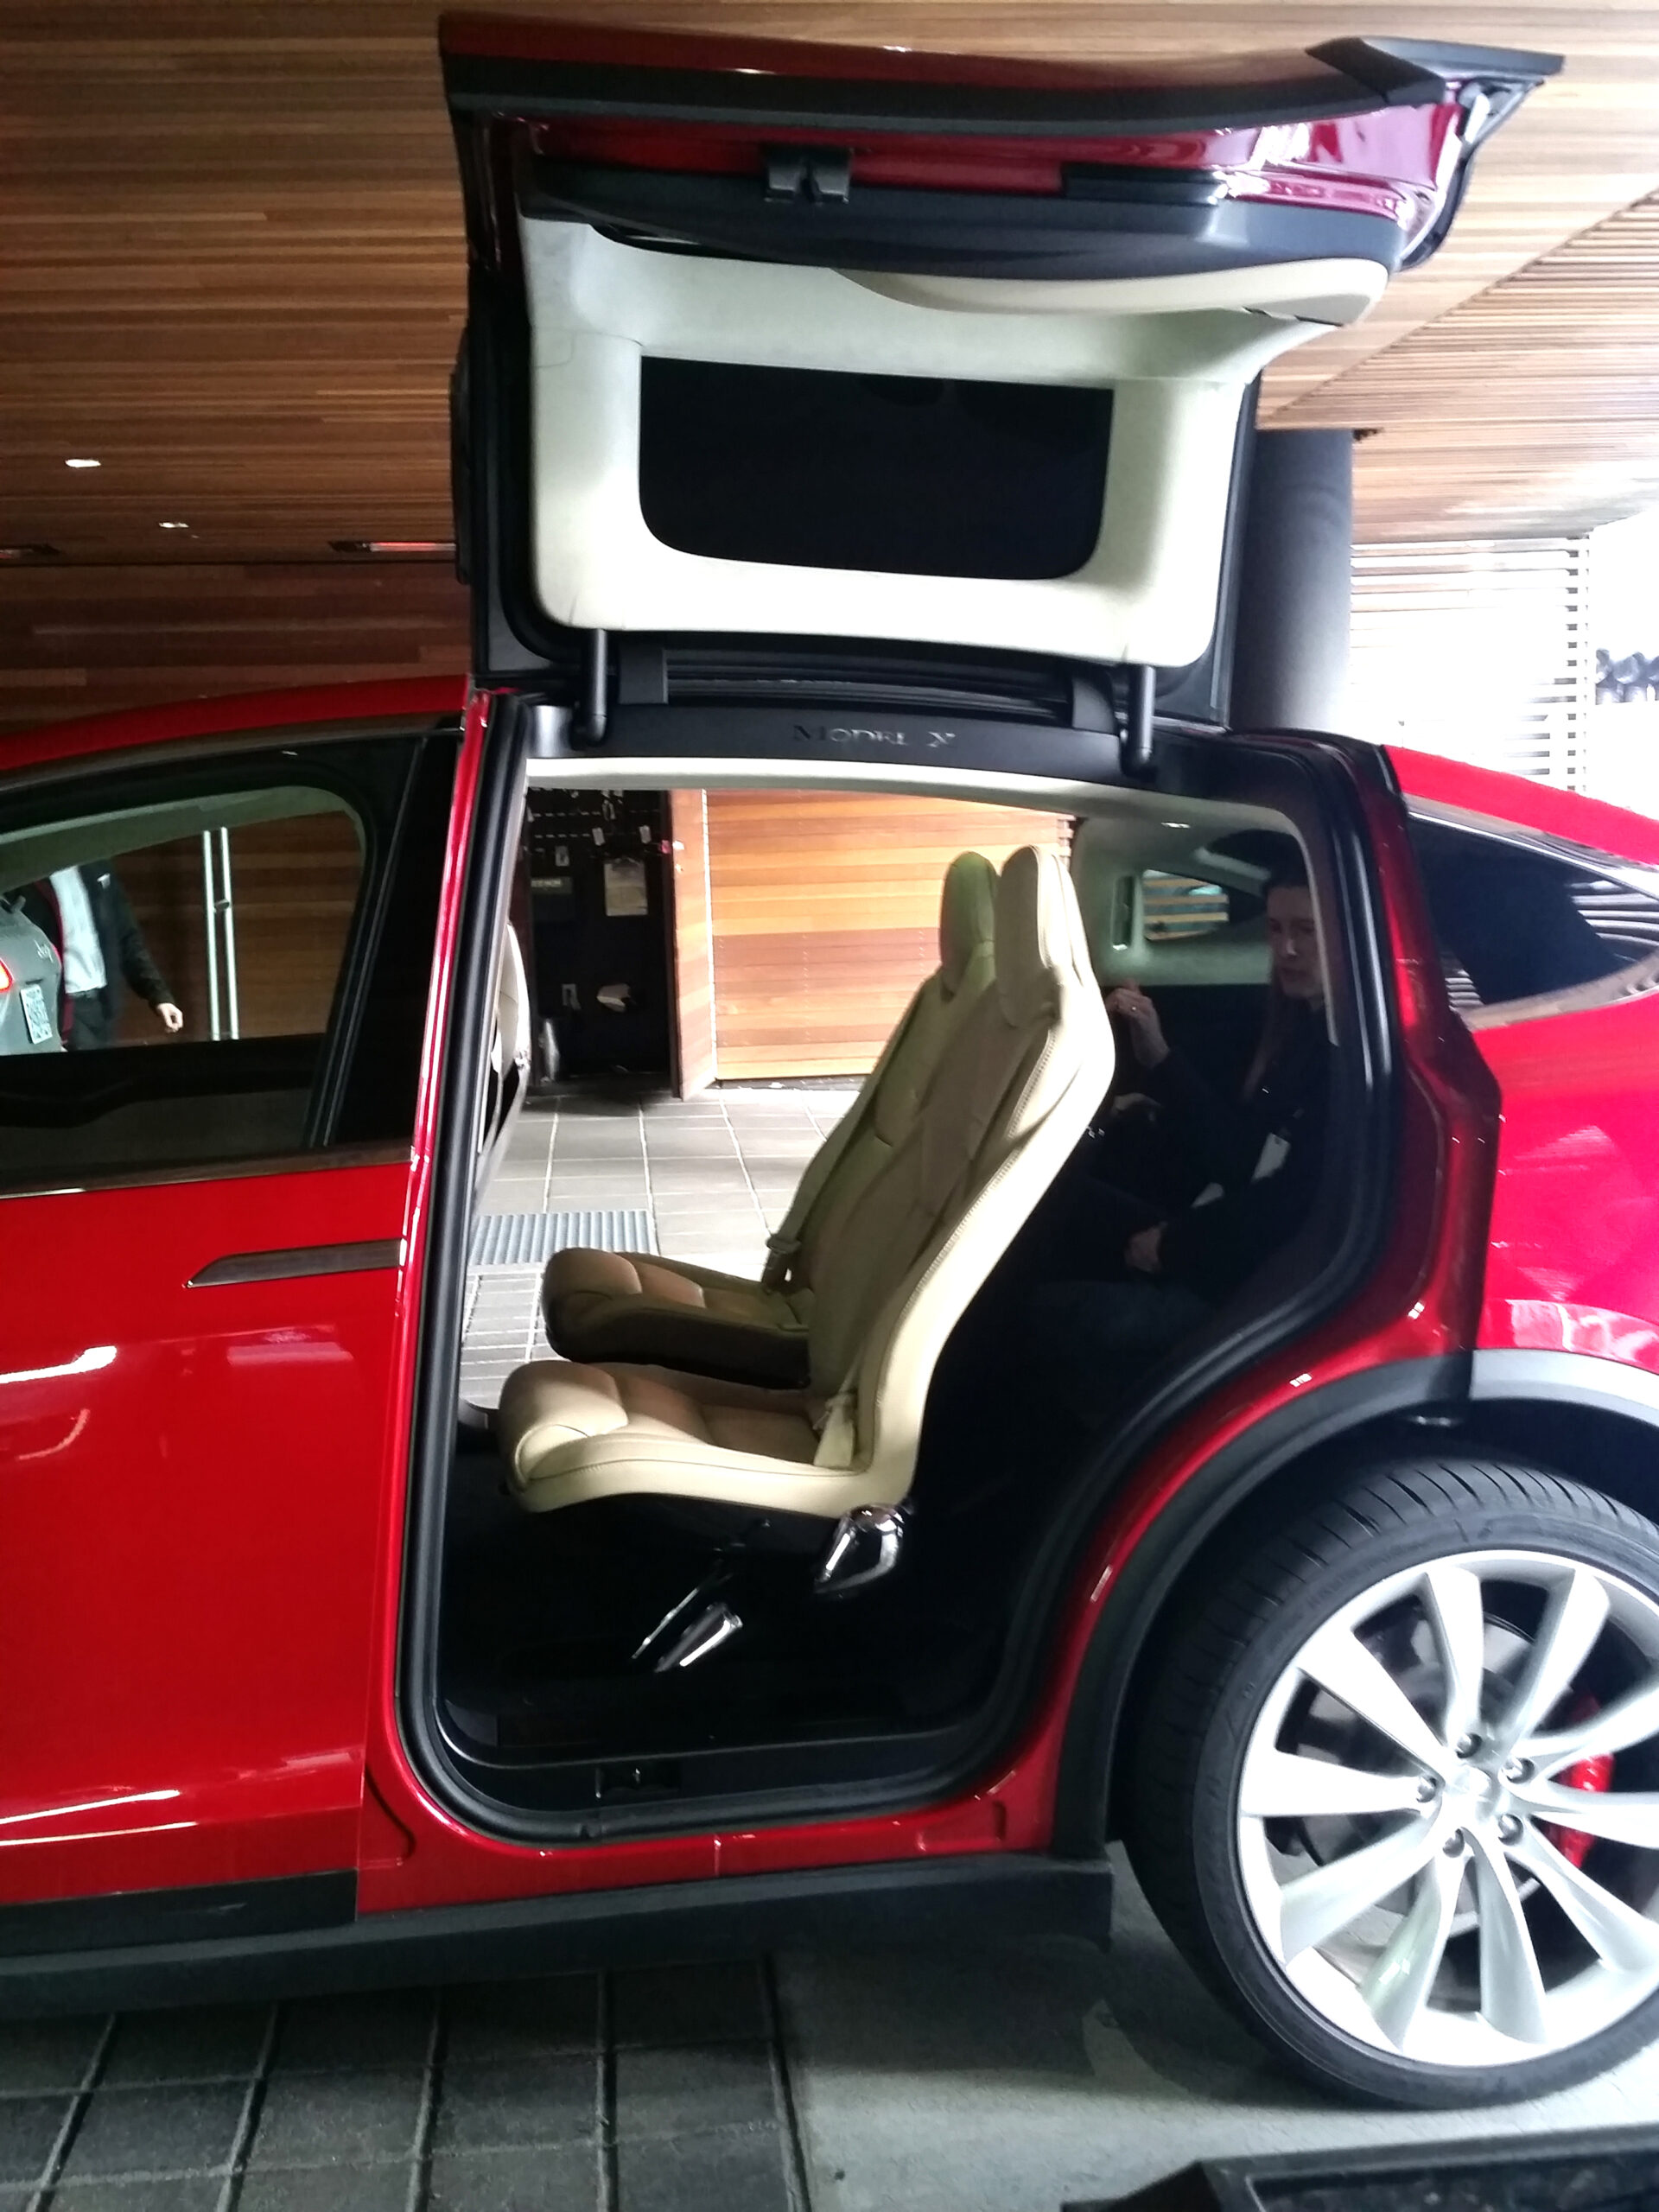 Tesla Model X: “A Bigger, Better Honda CR-V”